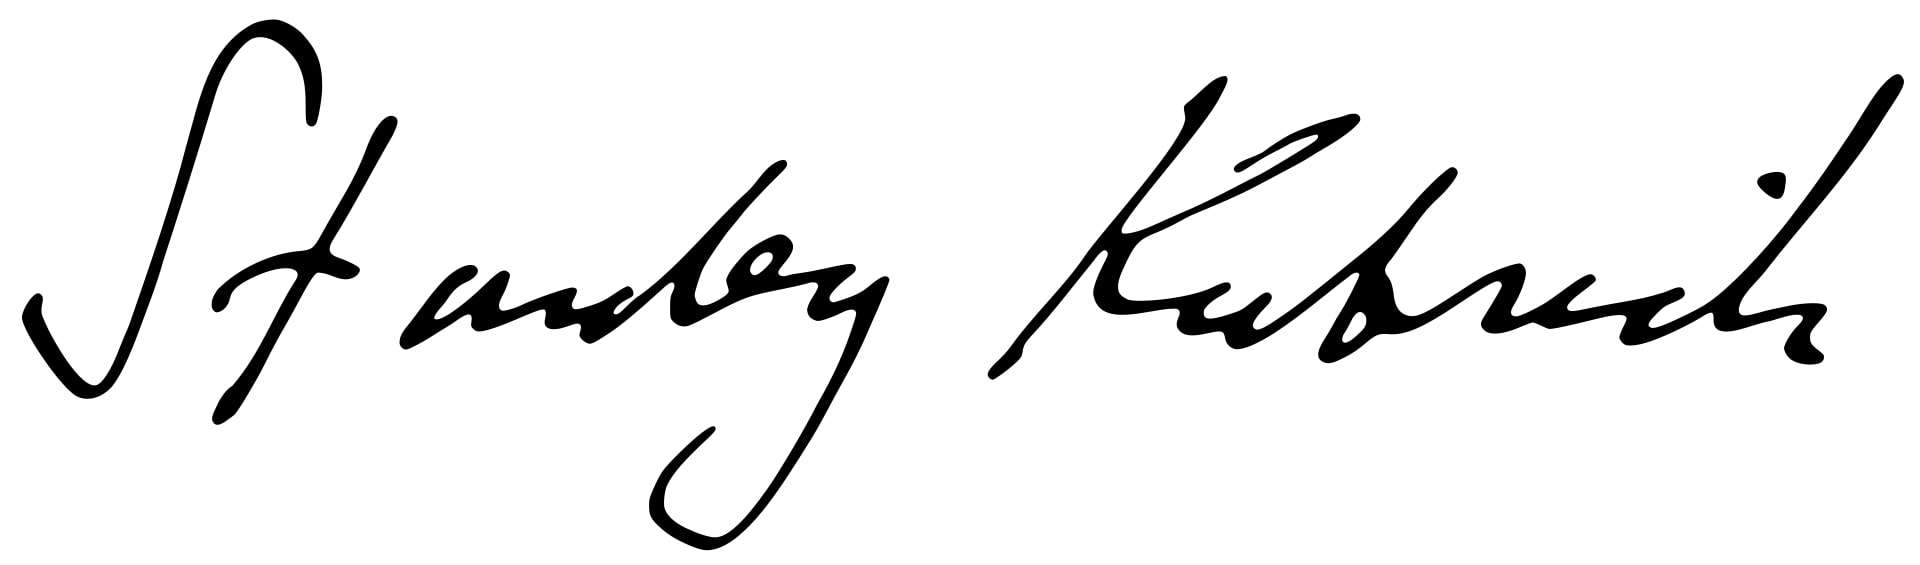 Stanley Kubrick Signature